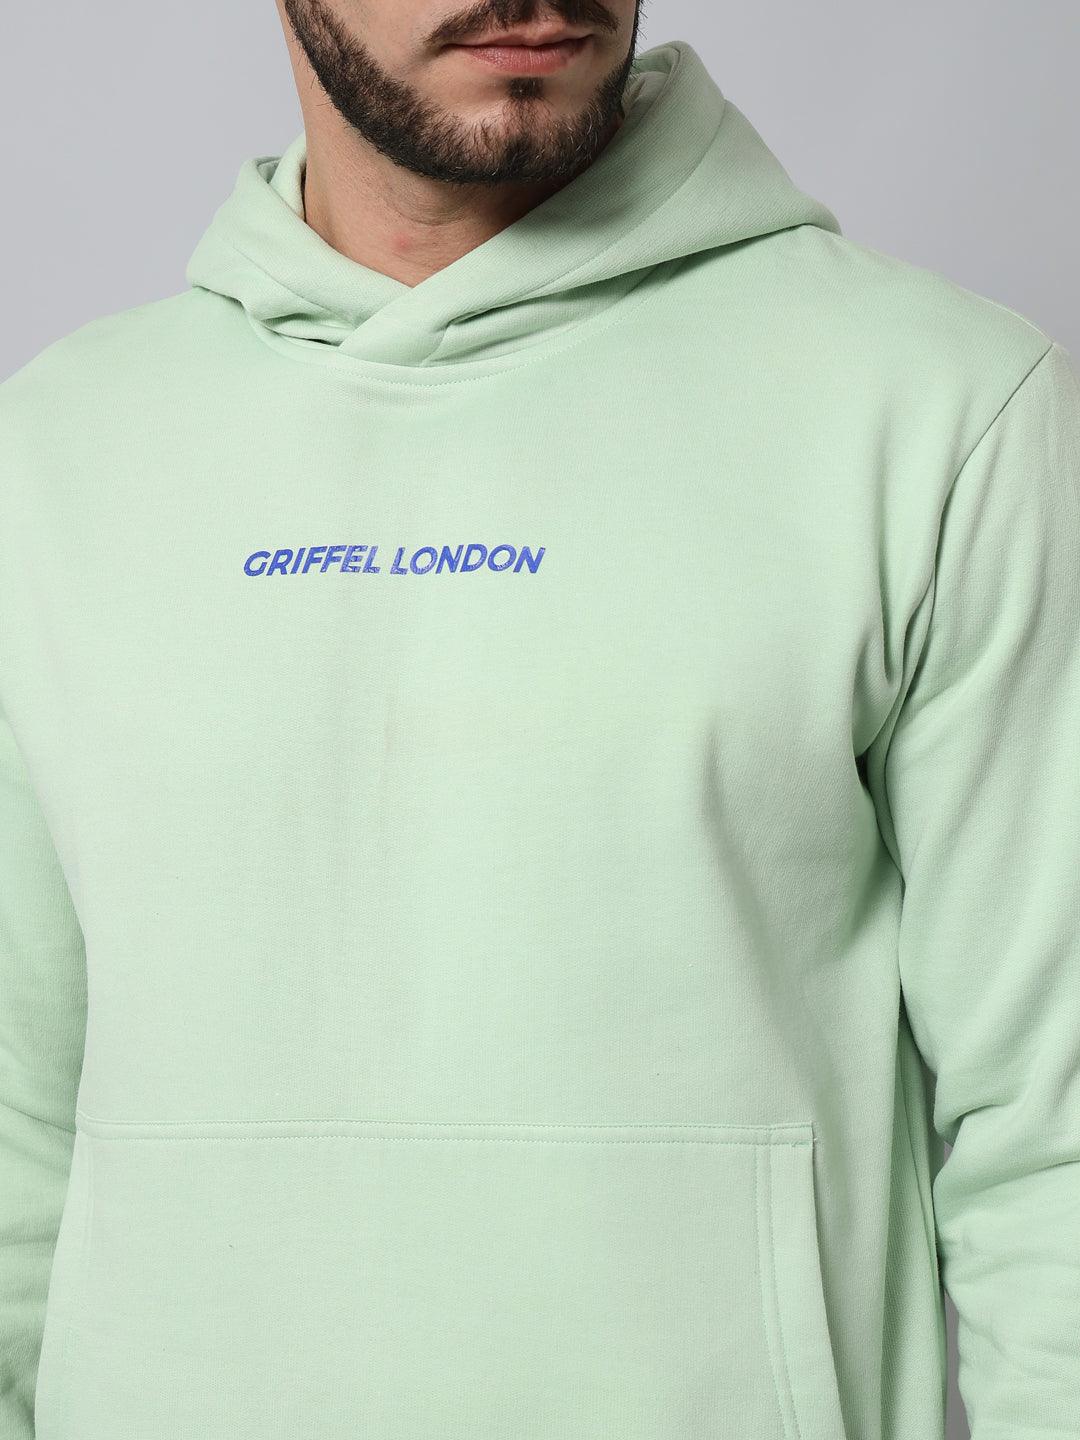 Griffel Men's Sea Green Cotton Front Logo Fleece Hoody Sweatshirt with Full Sleeve - griffel